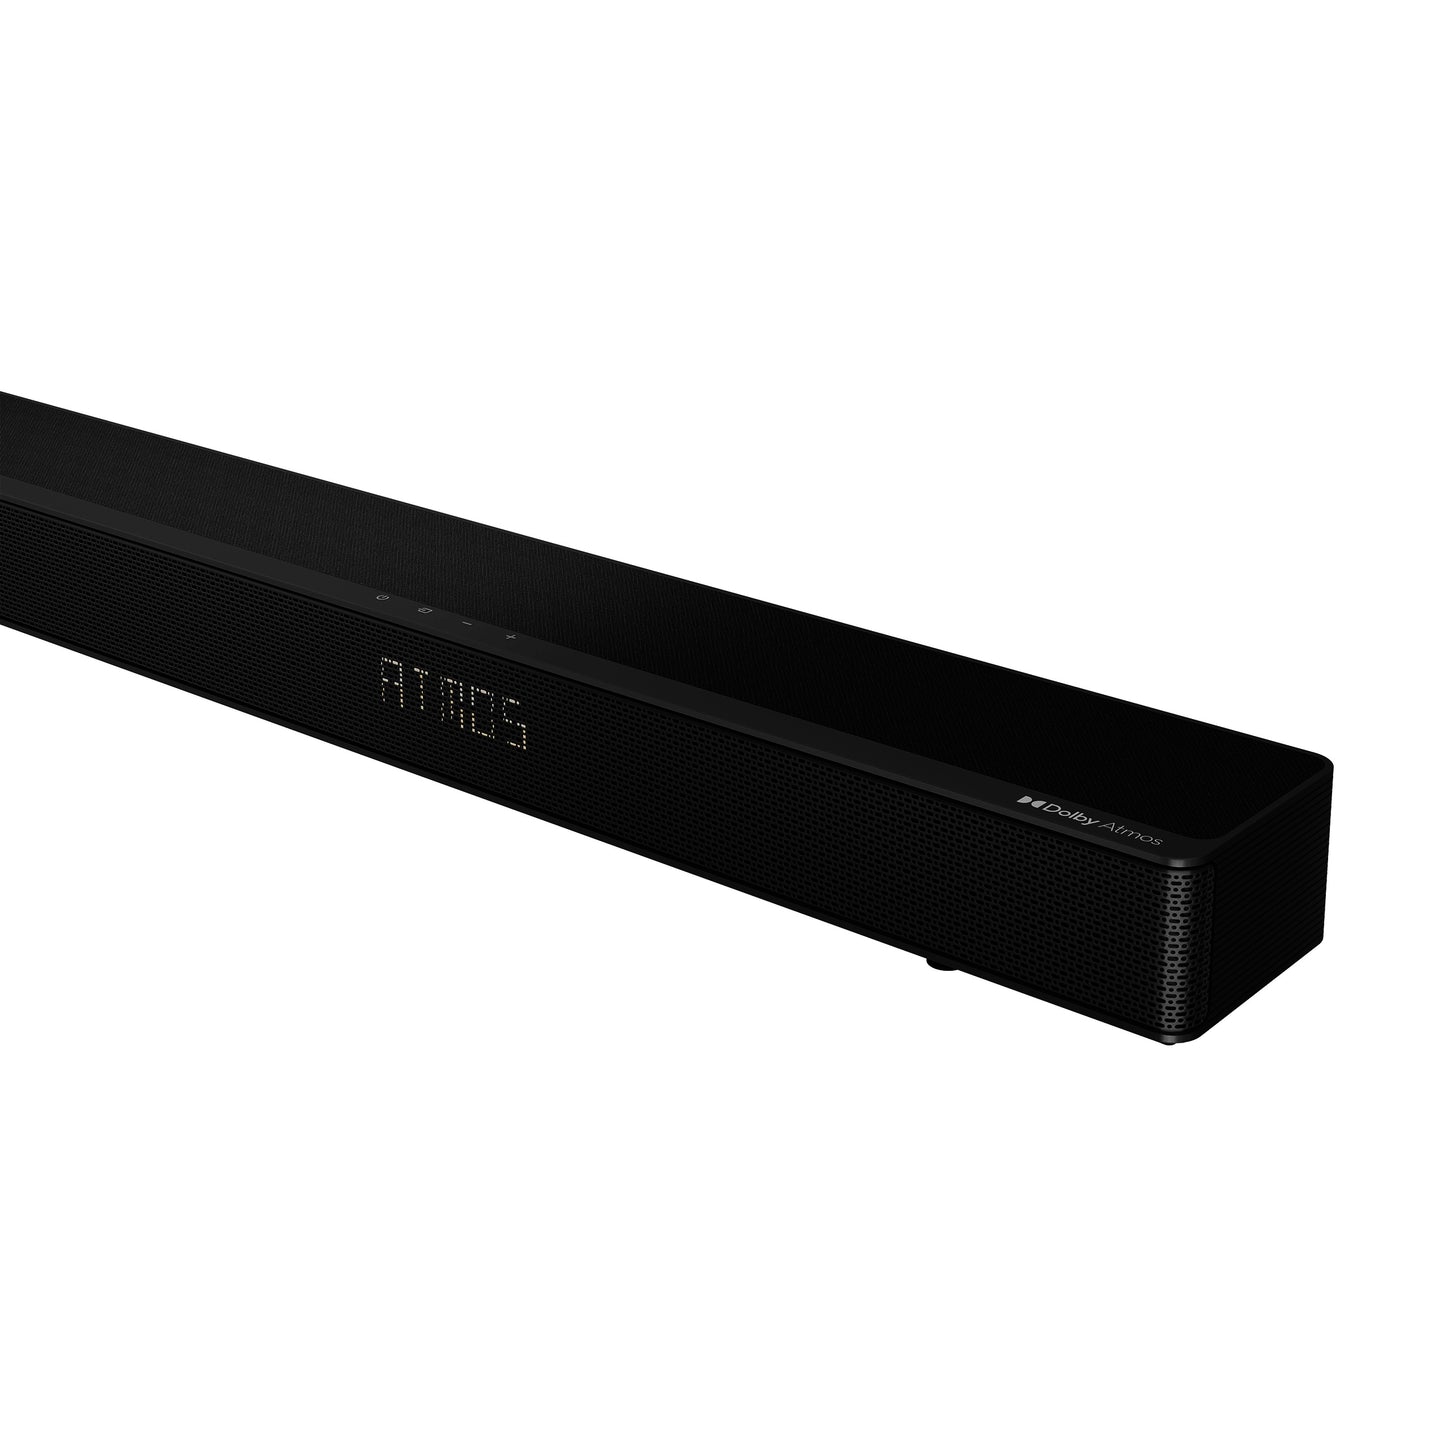 Hisense 300W Bluetooth Sound Bar System AUD 2107G